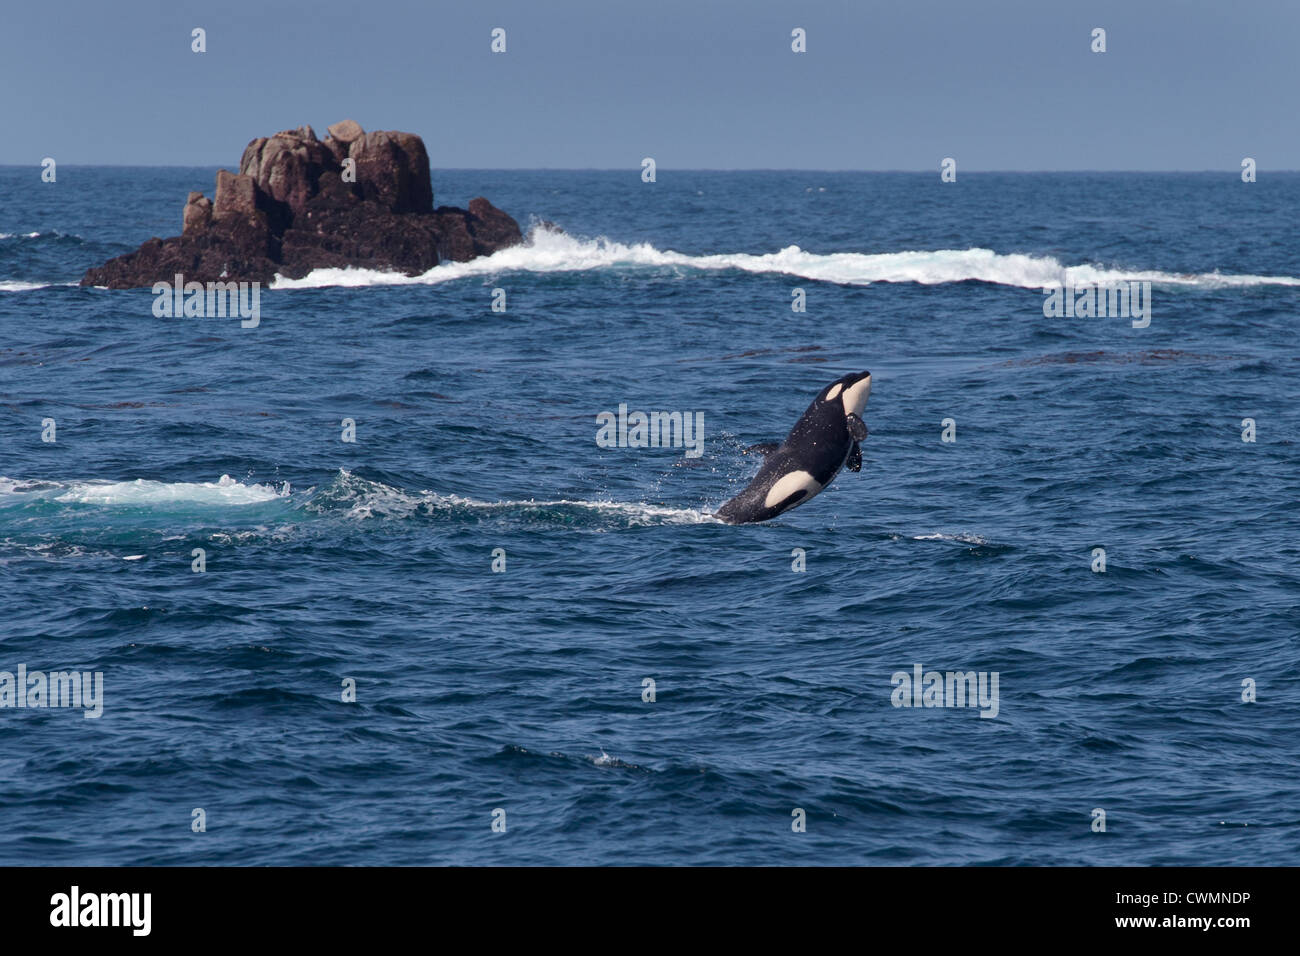 Juvenile Transient Killer Whale or Orca (Orcinus orca), breaching, Monterey, California, Pacific Ocean. Stock Photo